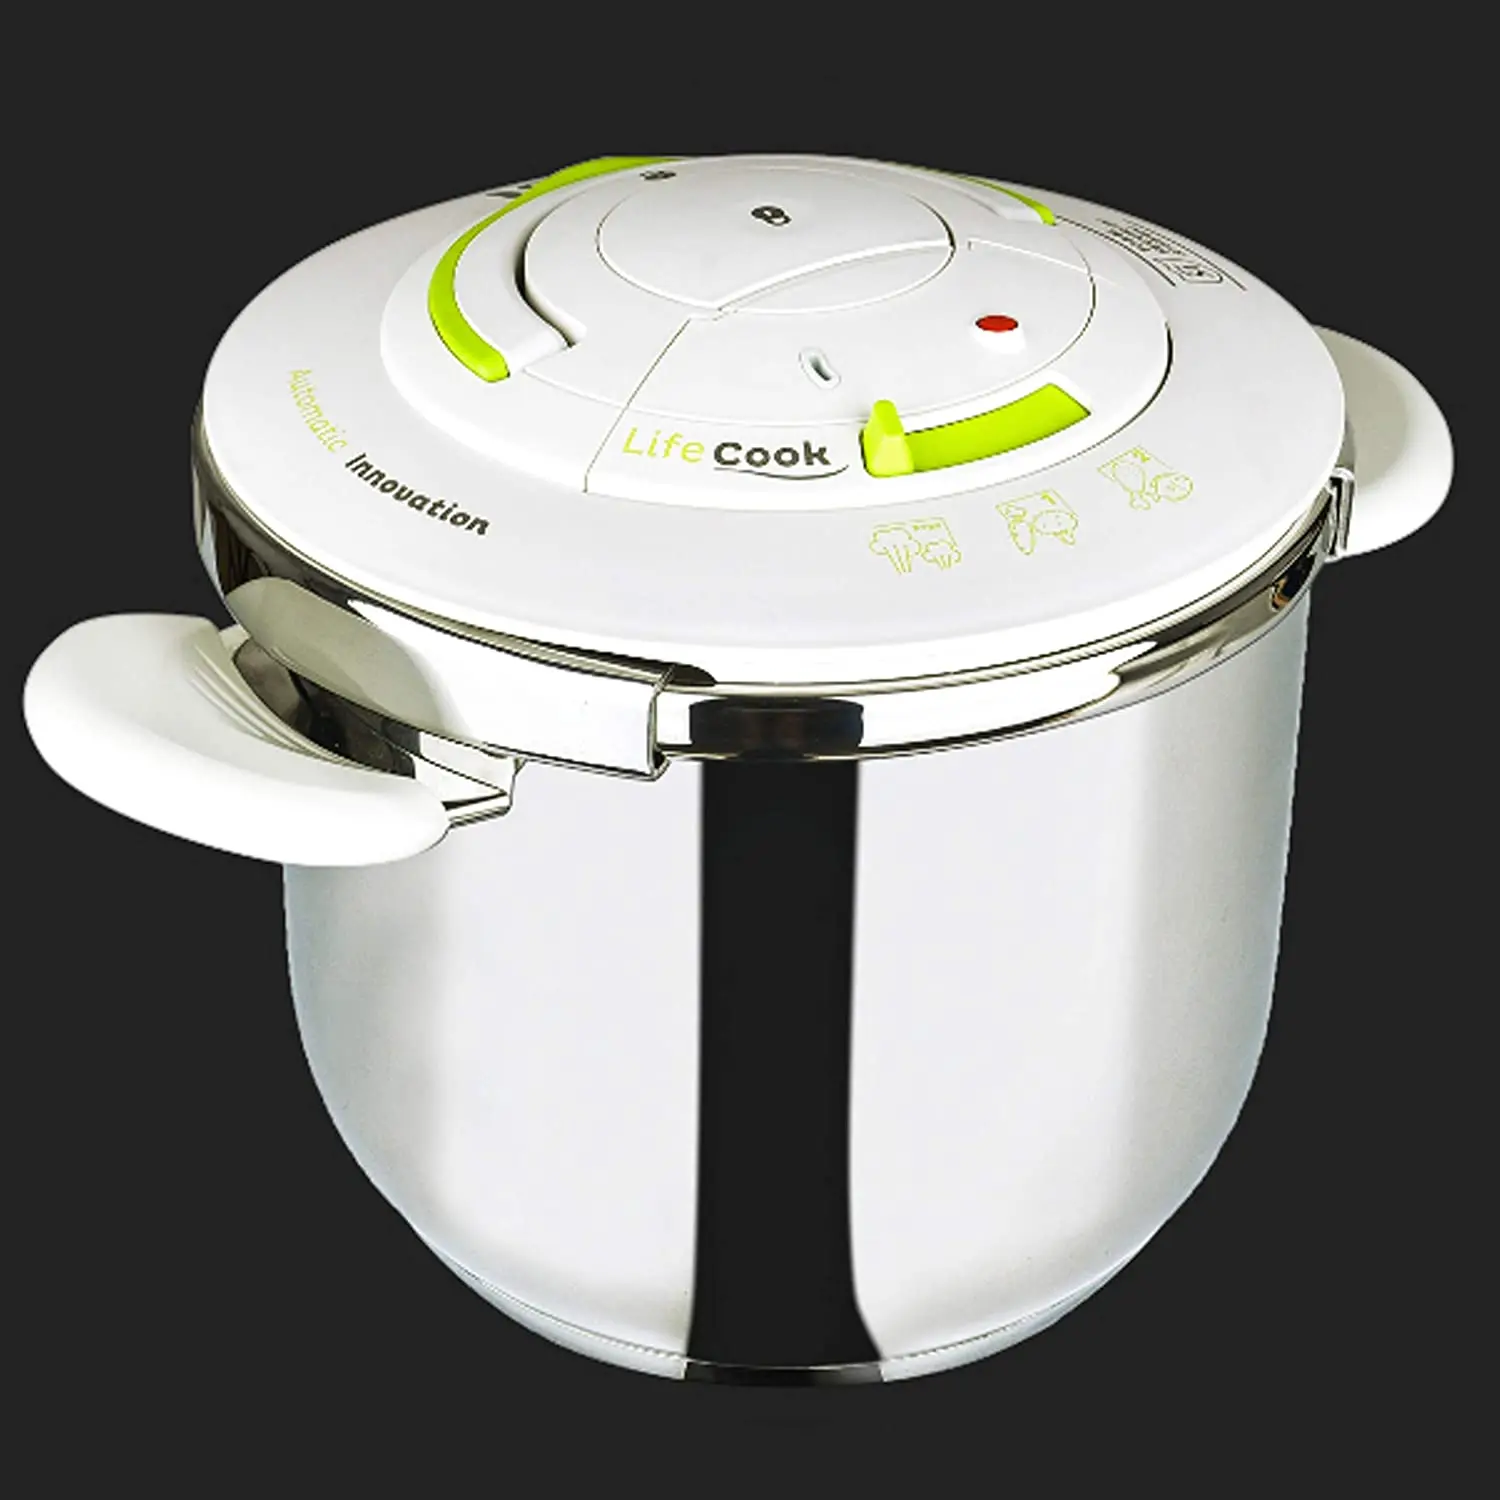 San Ignacio BGEU-1524 pressure cooker 22 cm 6,5 L LIFECOOK stainless steel,  Multicolor [energy efficiency class a] - AliExpress